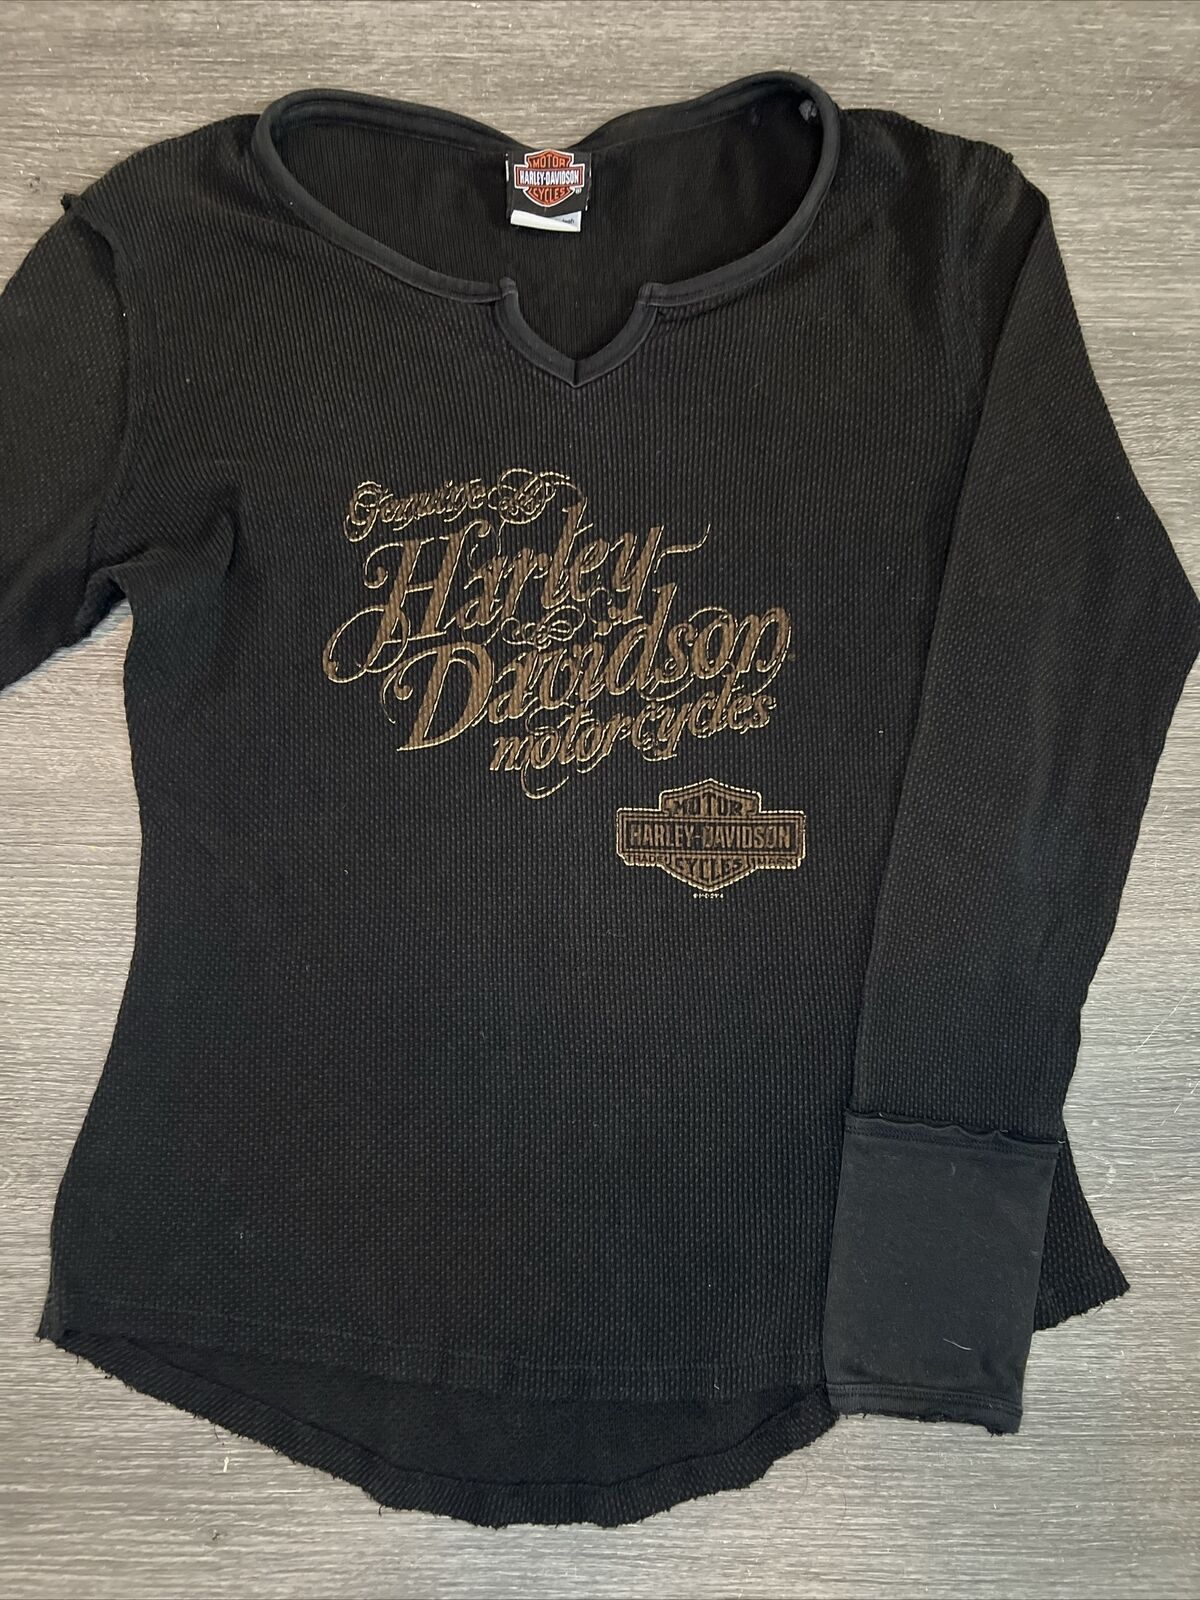 Harley Davidson Women’s Thermal Henley Long Sleeve Shirt Top Sz Medium Black